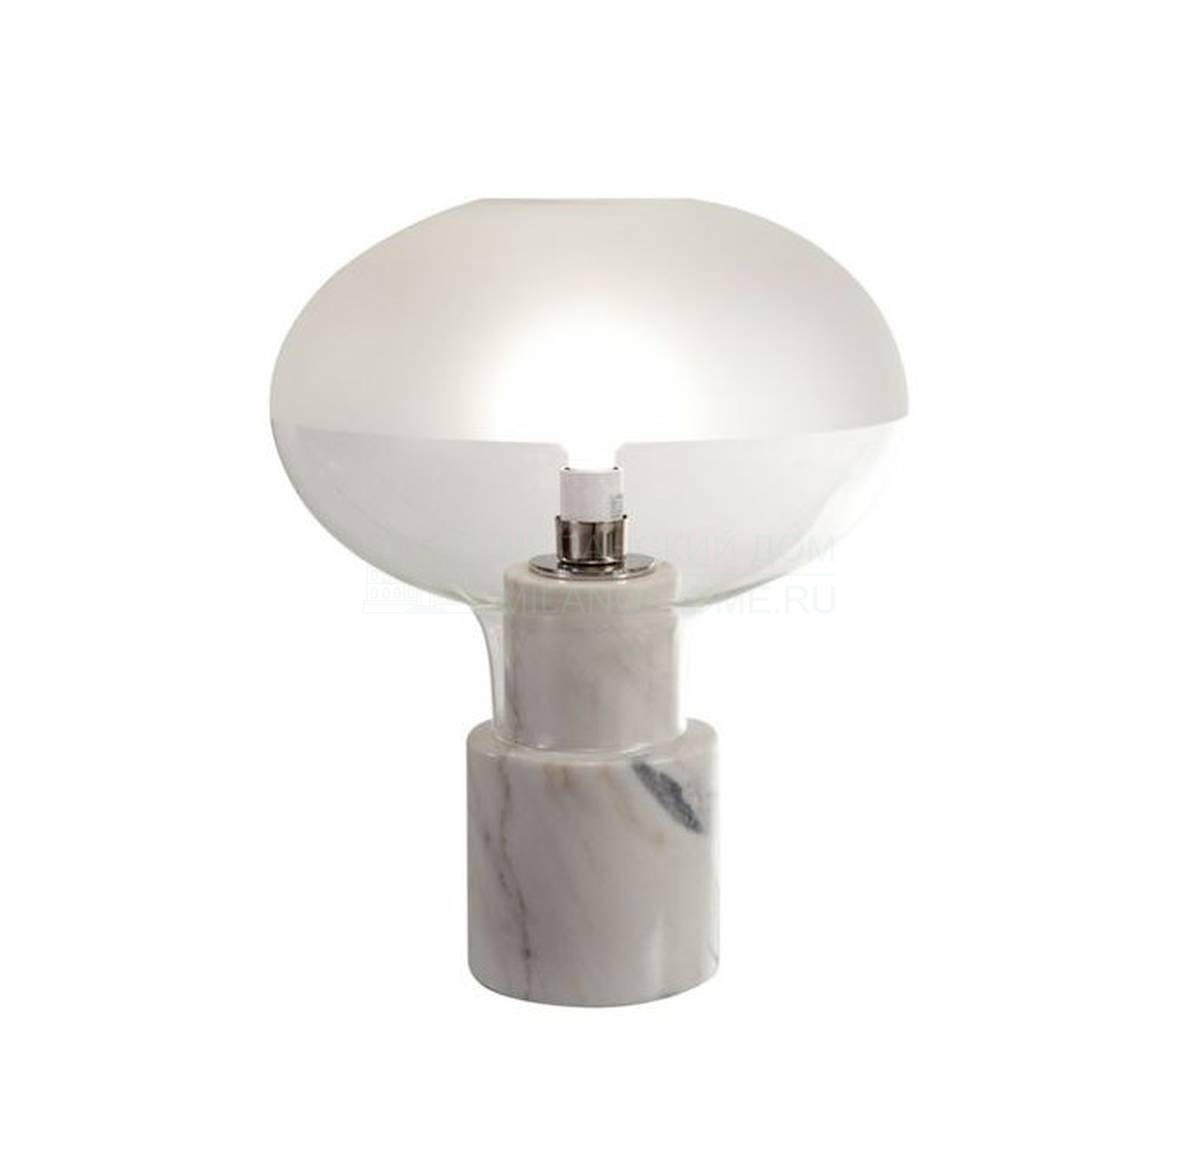 Настольная лампа Marble table lamp из Франции фабрики ROCHE BOBOIS